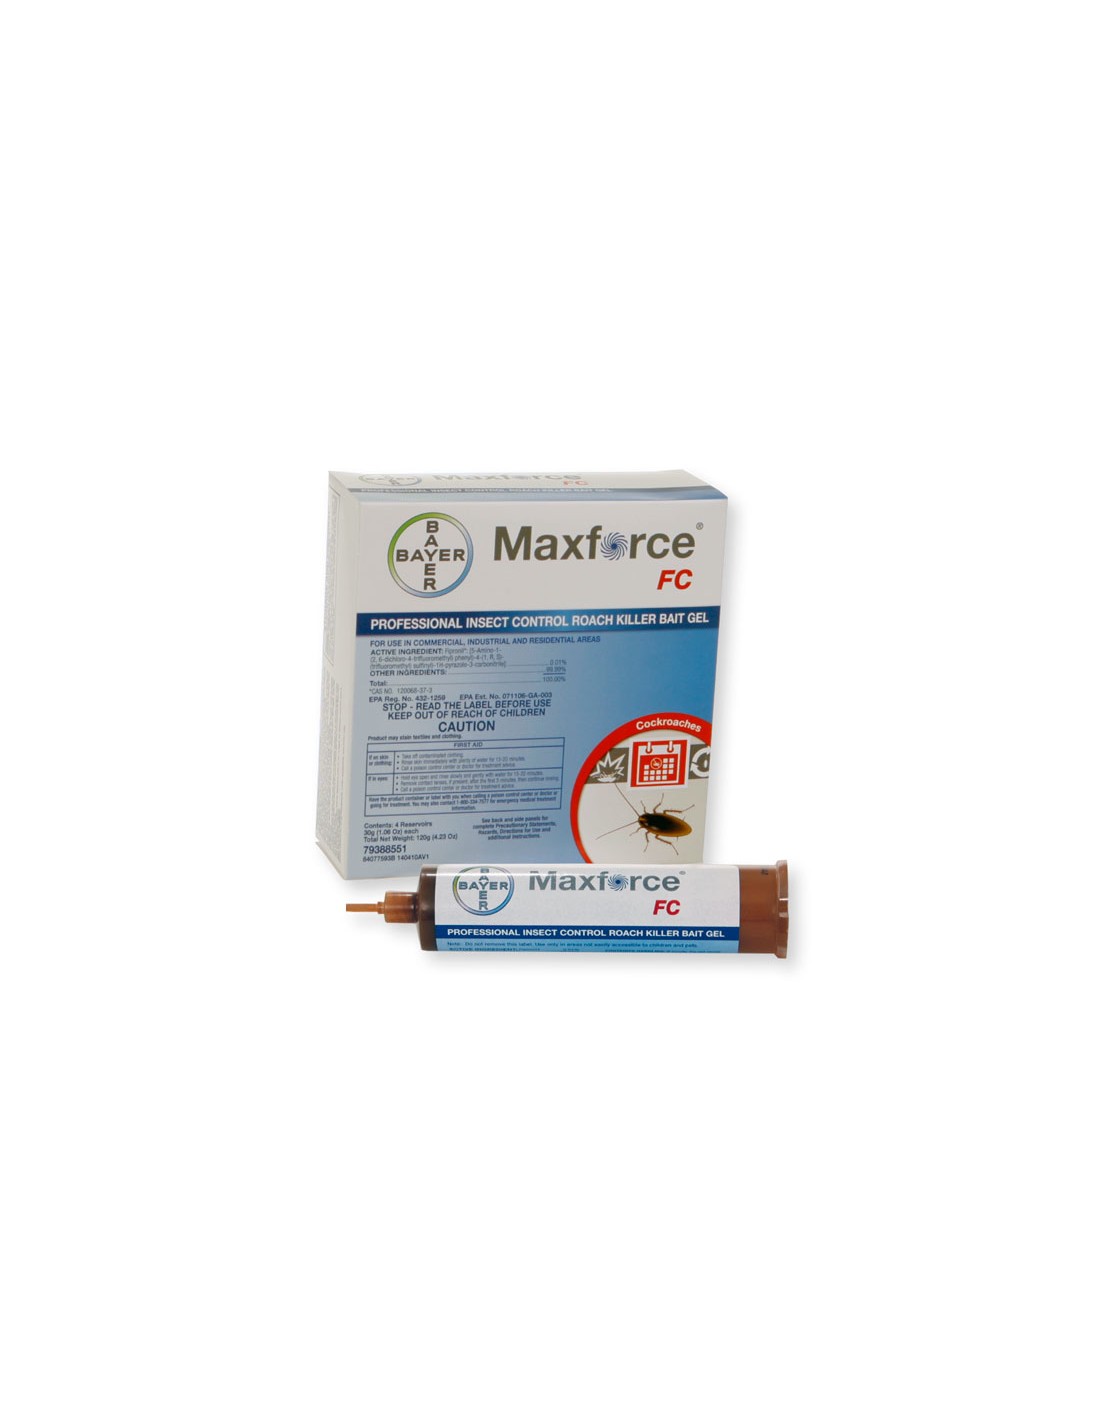 Maxforce FC 30 Gram Roach Bait Gel Questions & Answers